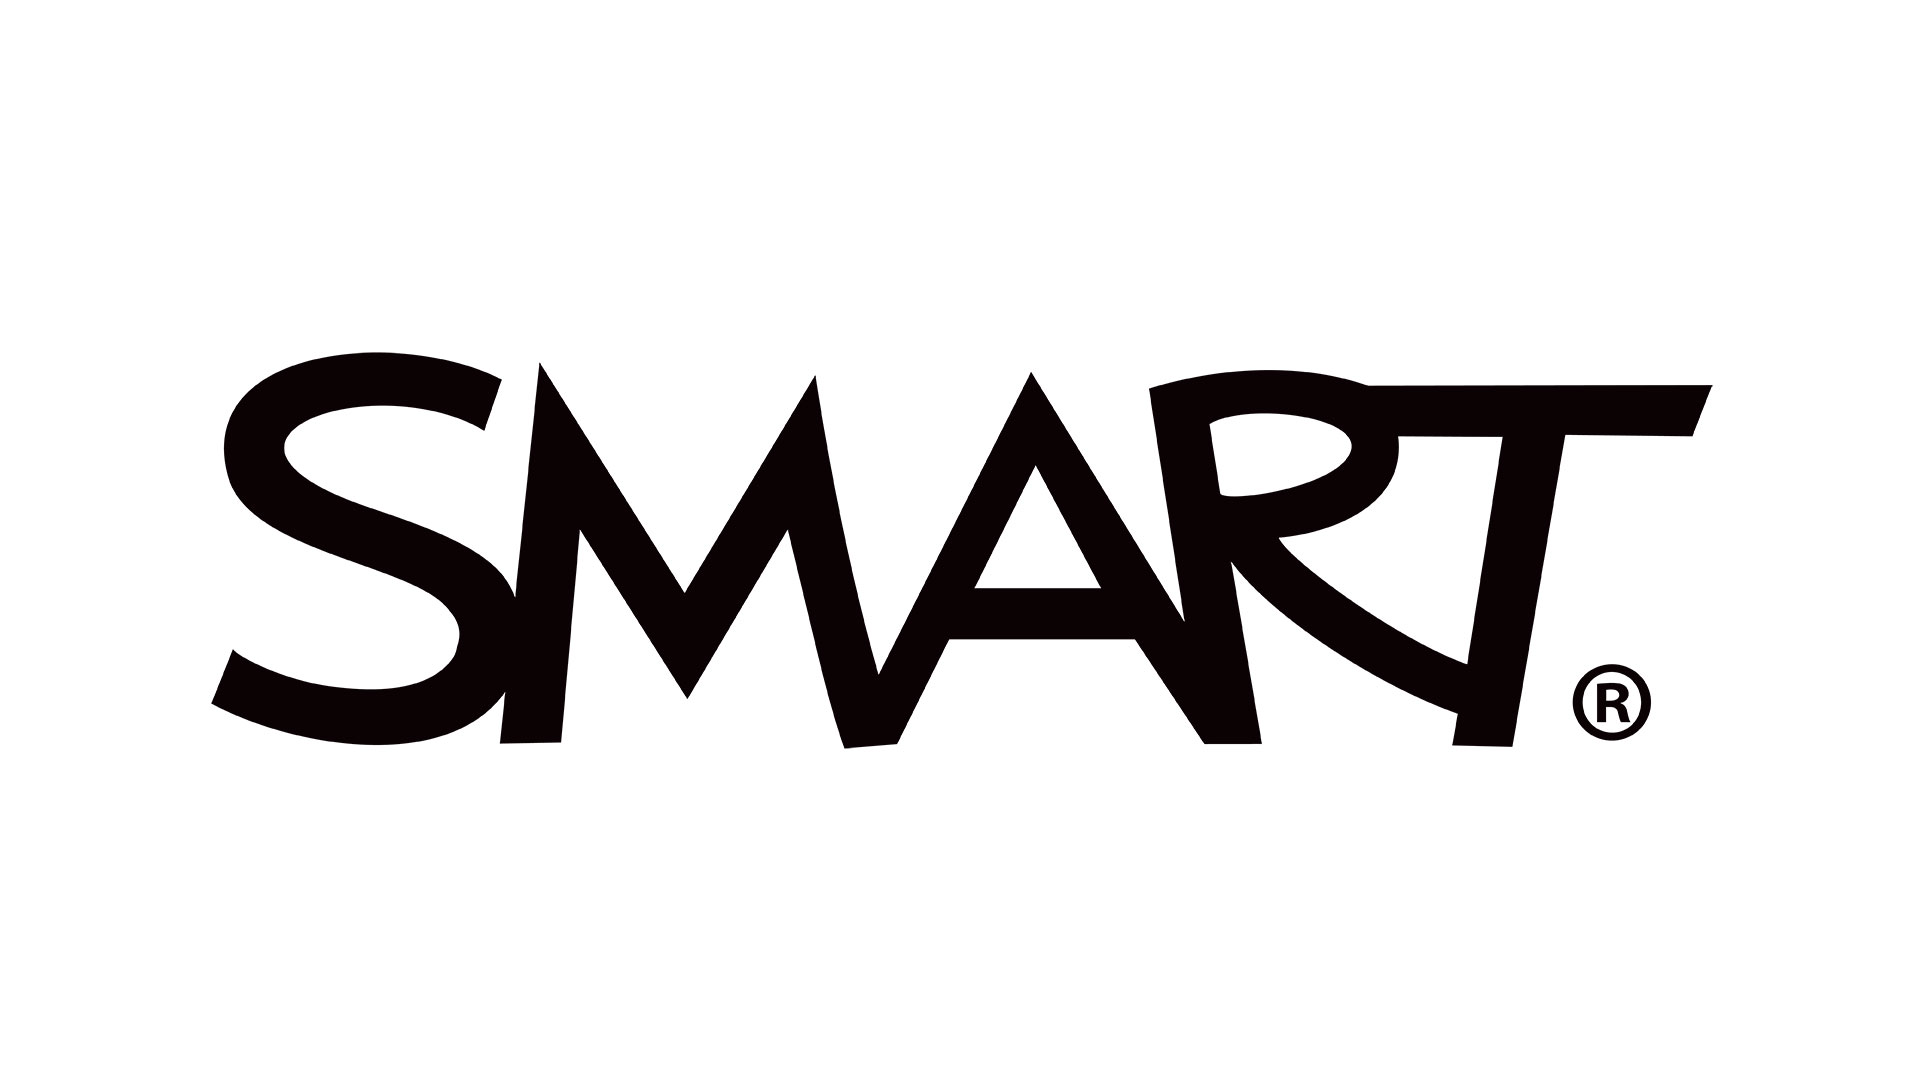 SMART logo